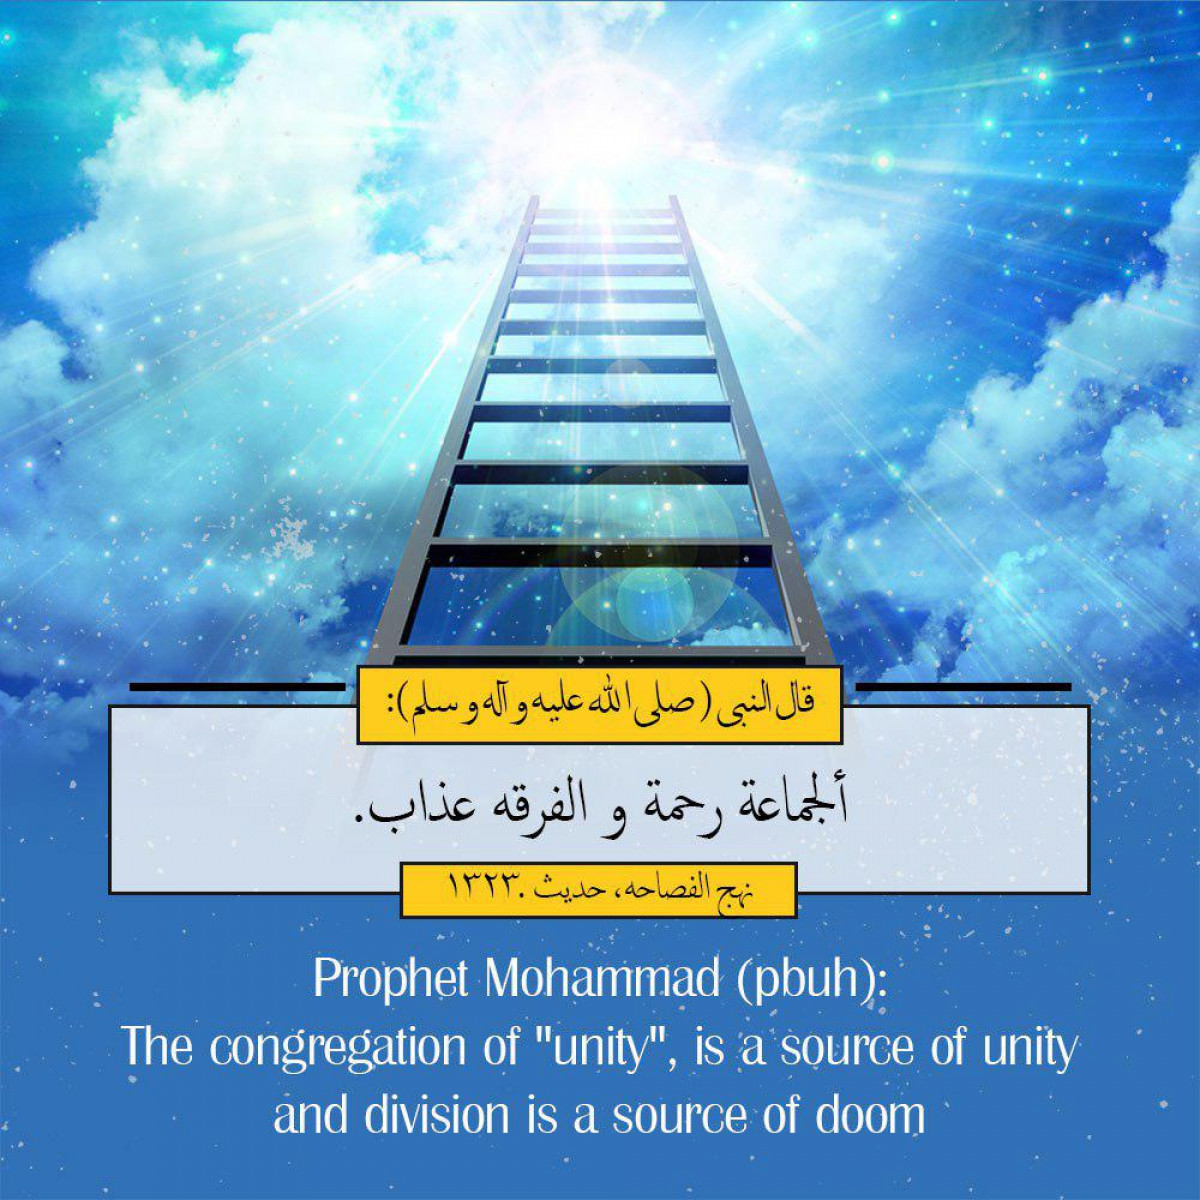 Prophet Mohammad (pbuh): The congregation of "unity", is a source of unity and division is a source of doom